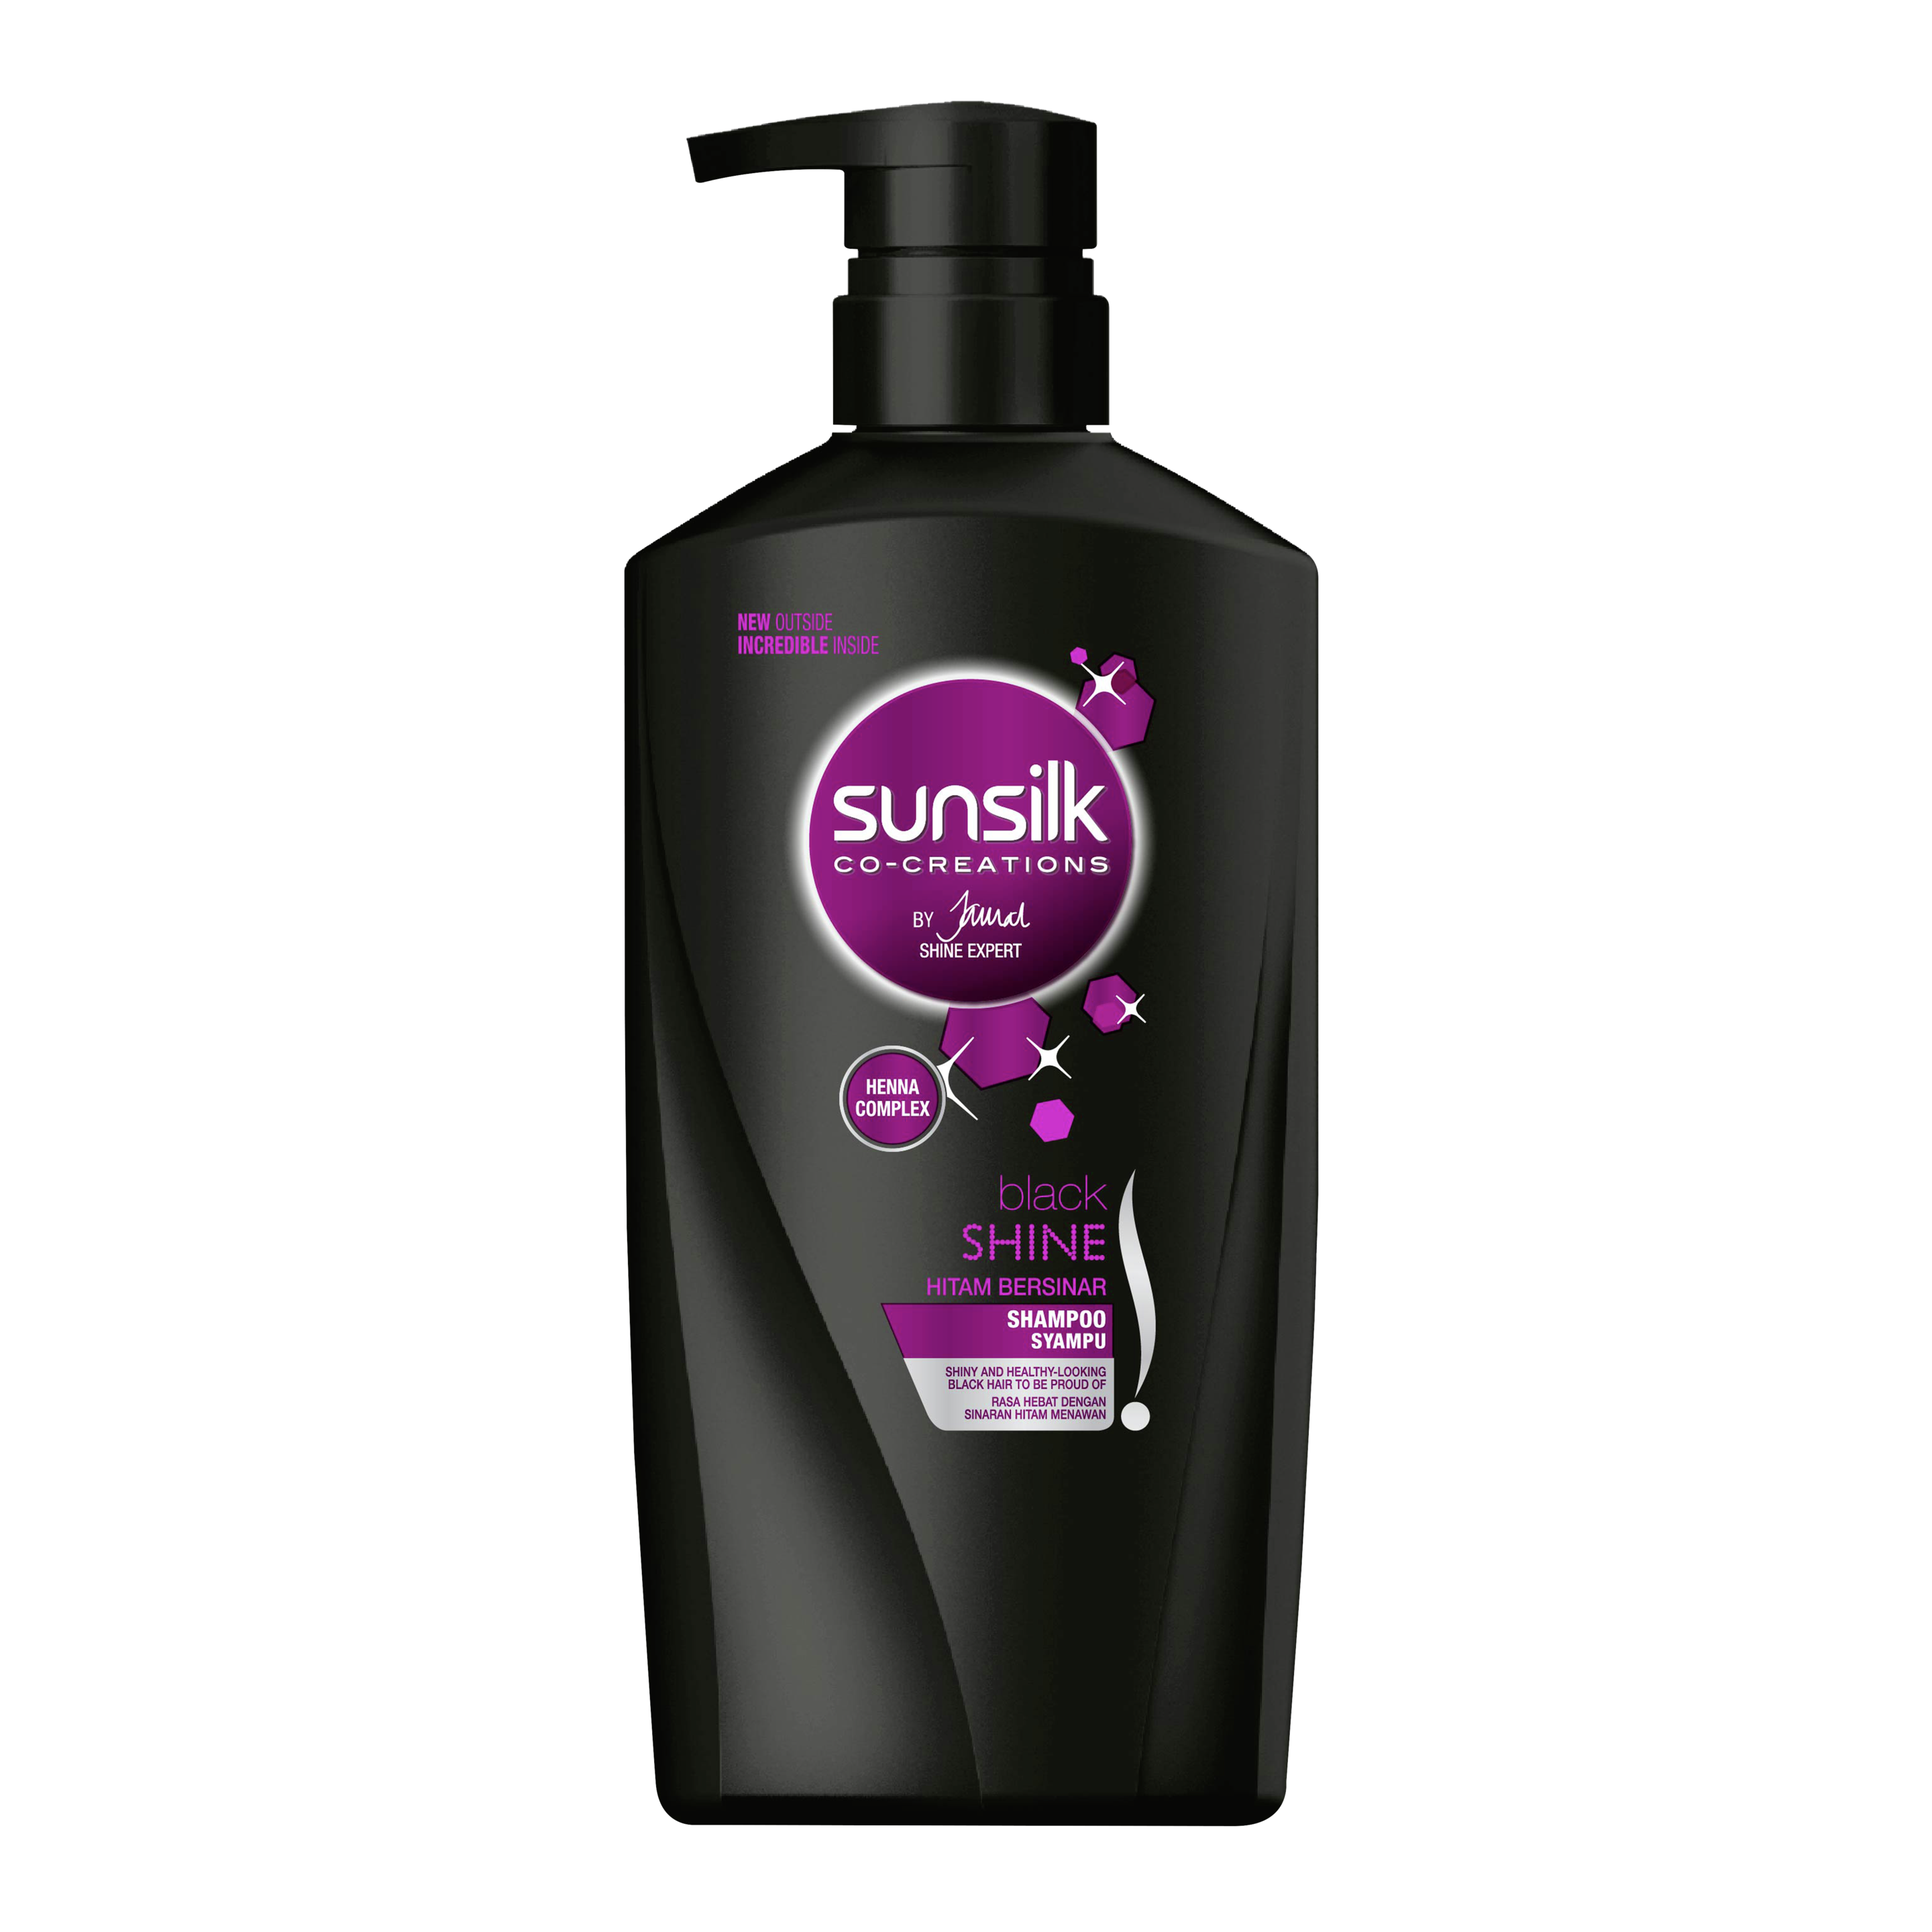 Sunsilk Black Shine Shampoo 650ml front of pack image